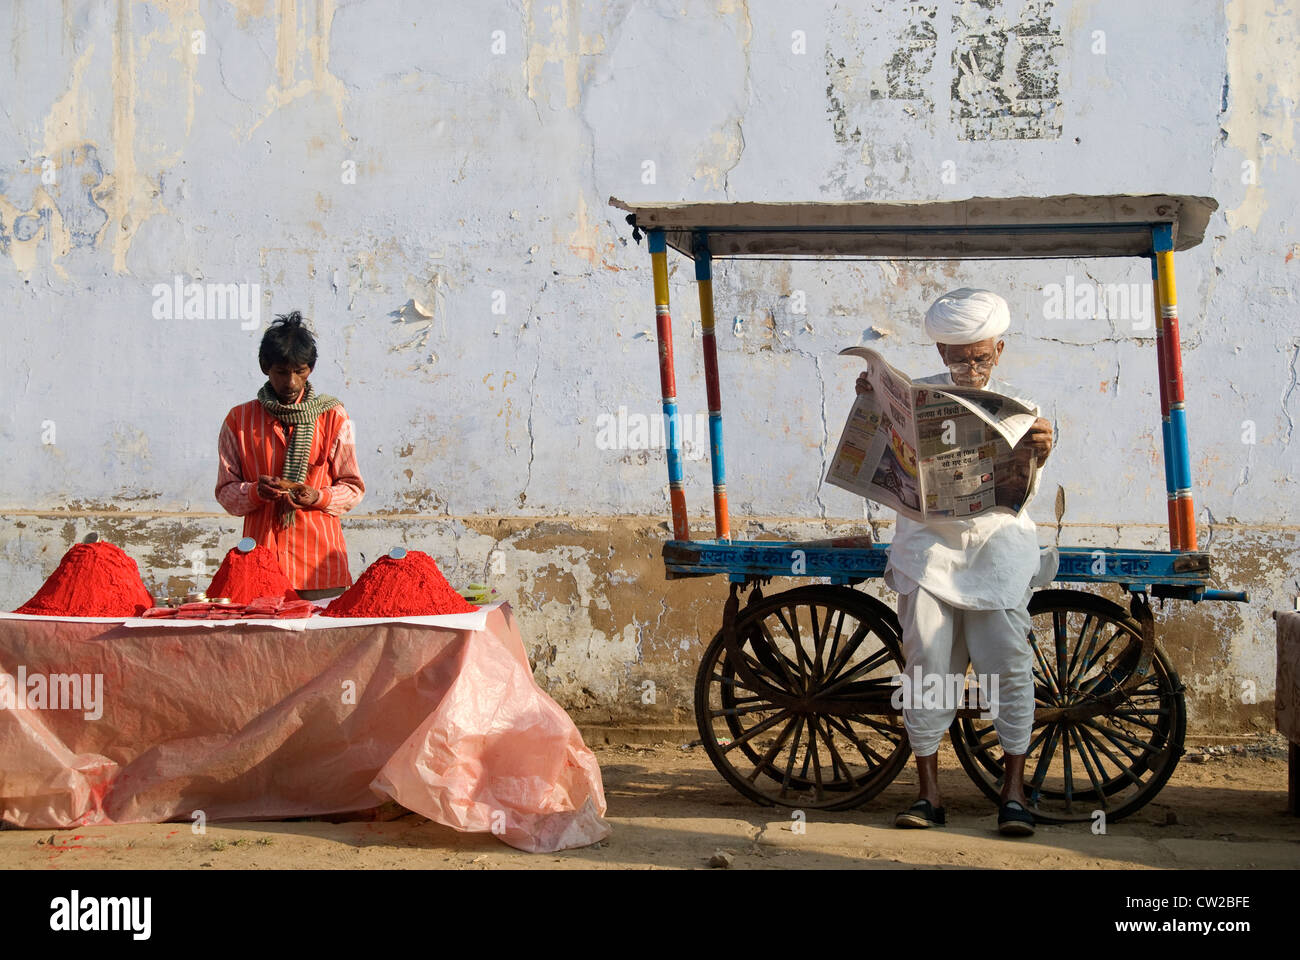 Elderly man reading newspaper. Wayside vendor selling color dyes beside him - Pushkar, Rajasthan Stock Photo